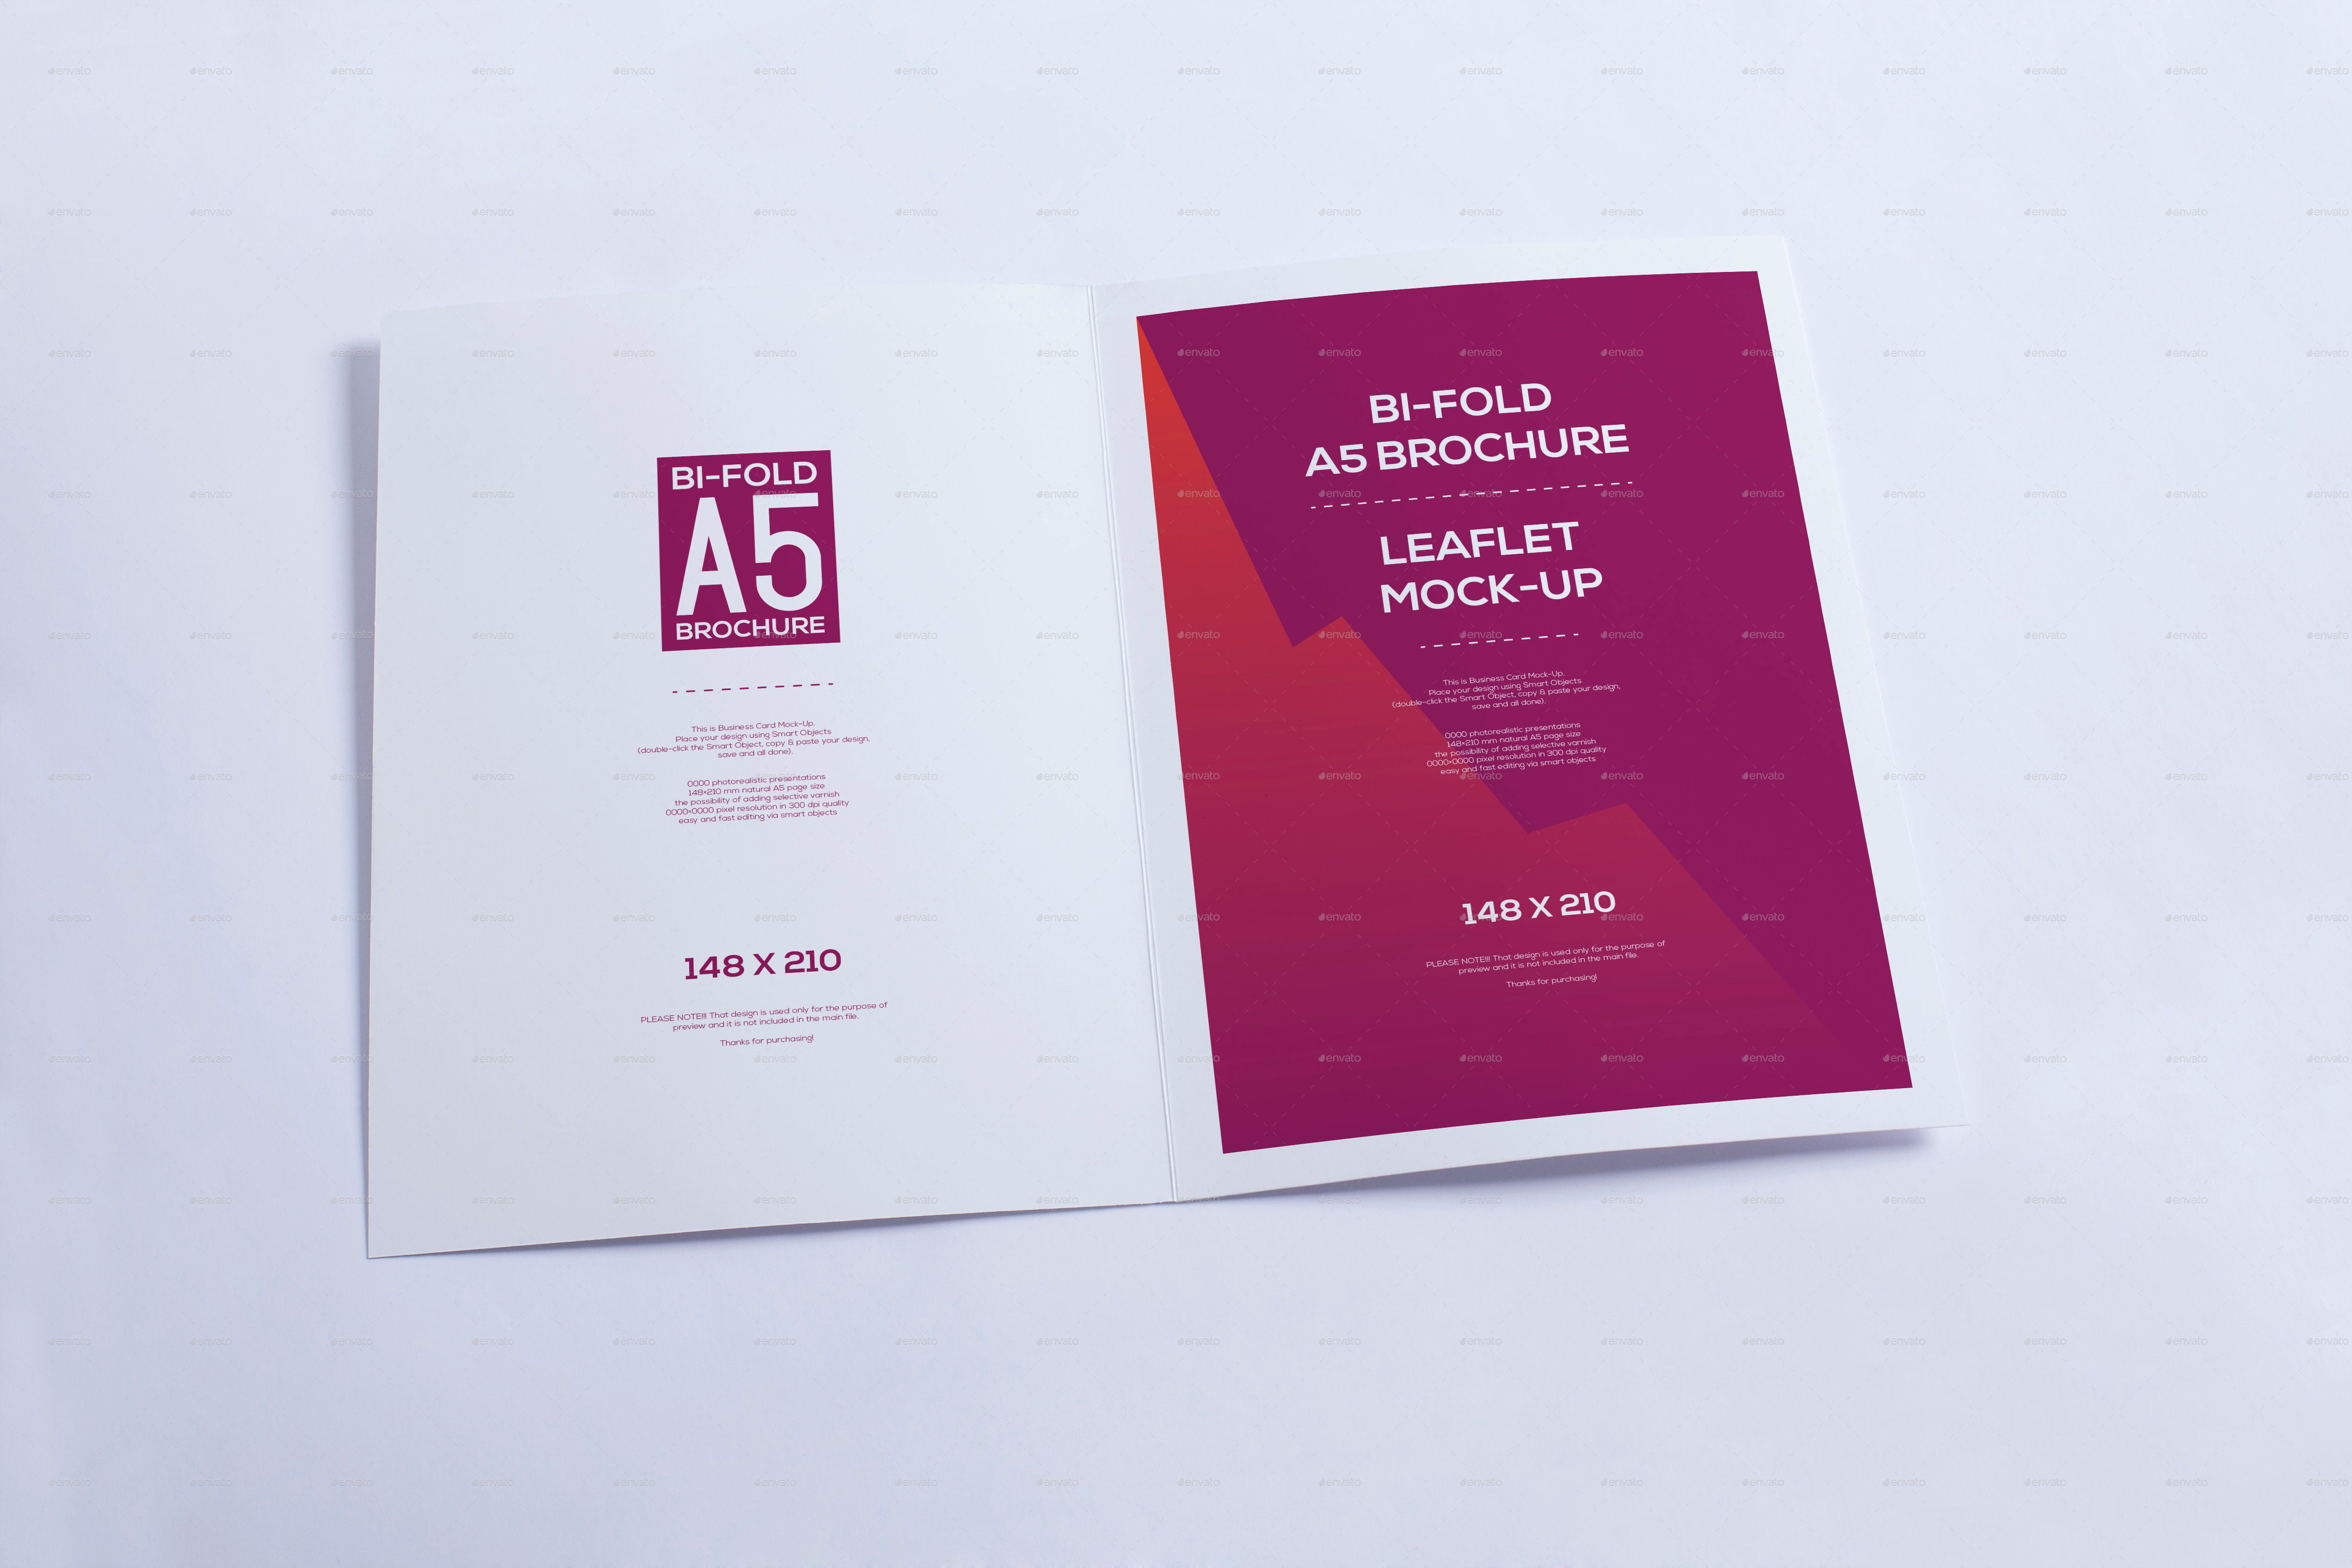 Download Bi-Fold A5 Brochure - Leaflet Mock-up by Xepeec | GraphicRiver